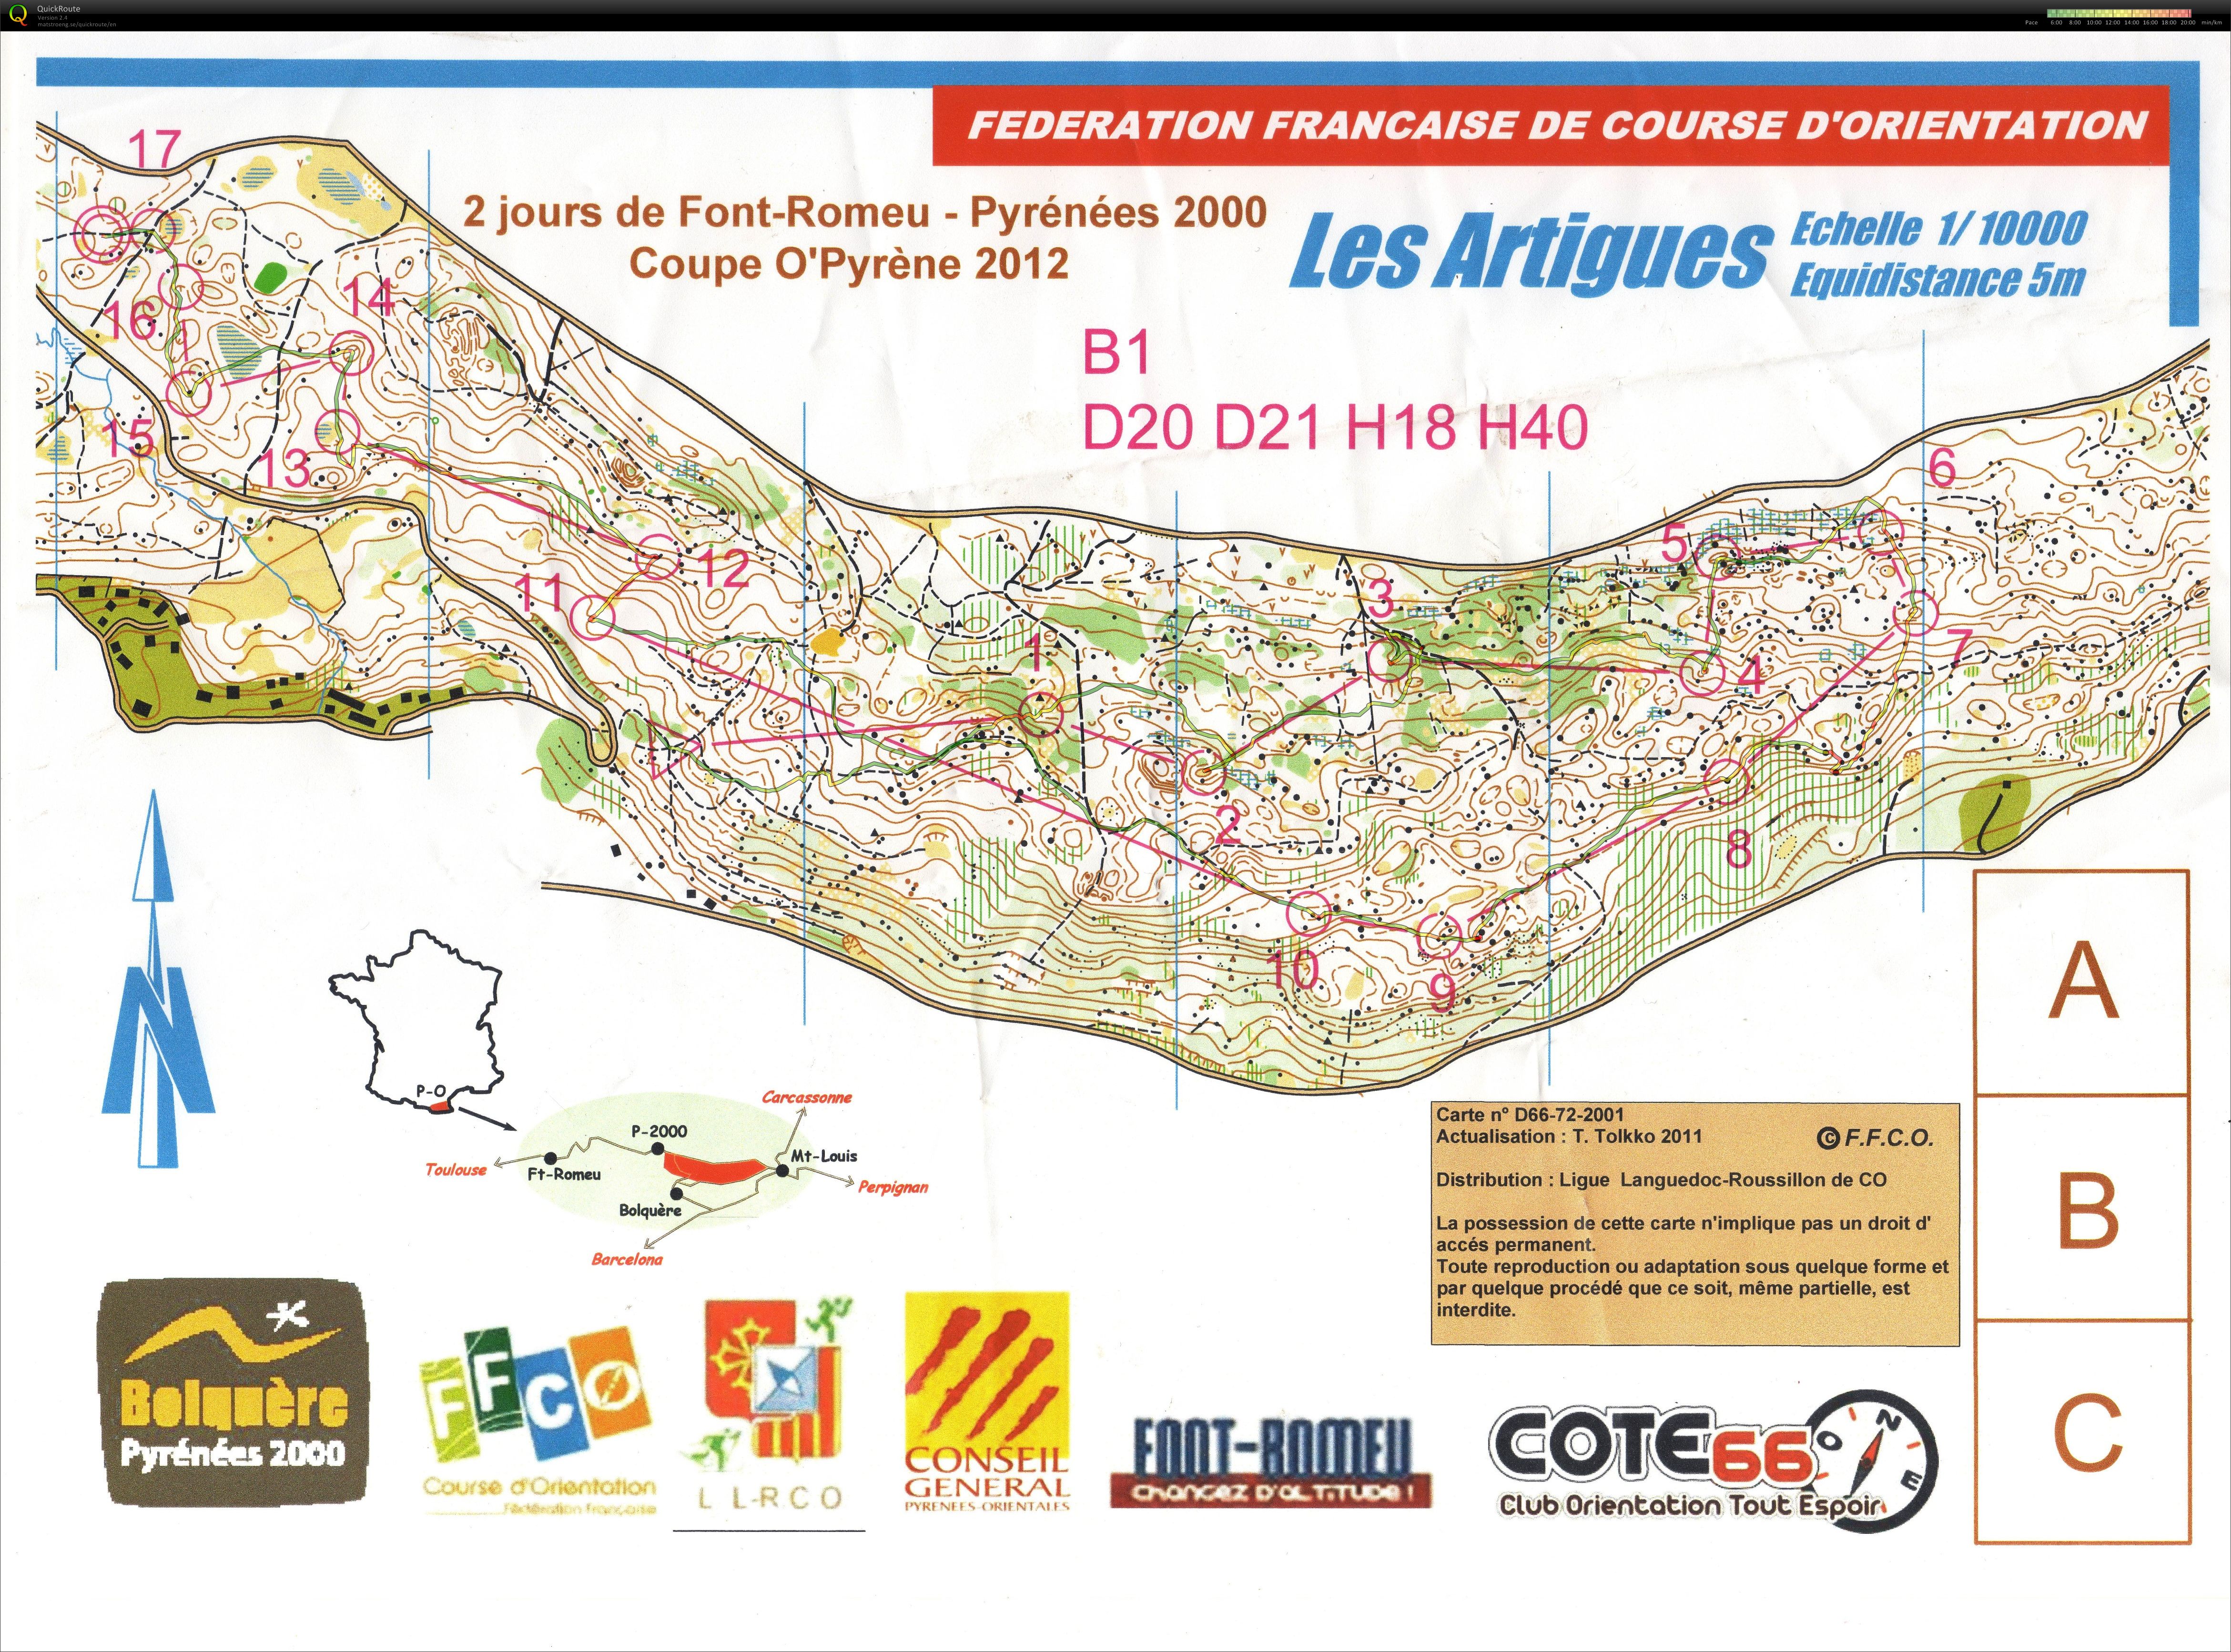 O'Pyrene 2 jours de Font Romeu - Pyrénées 2000 (02.09.2012)